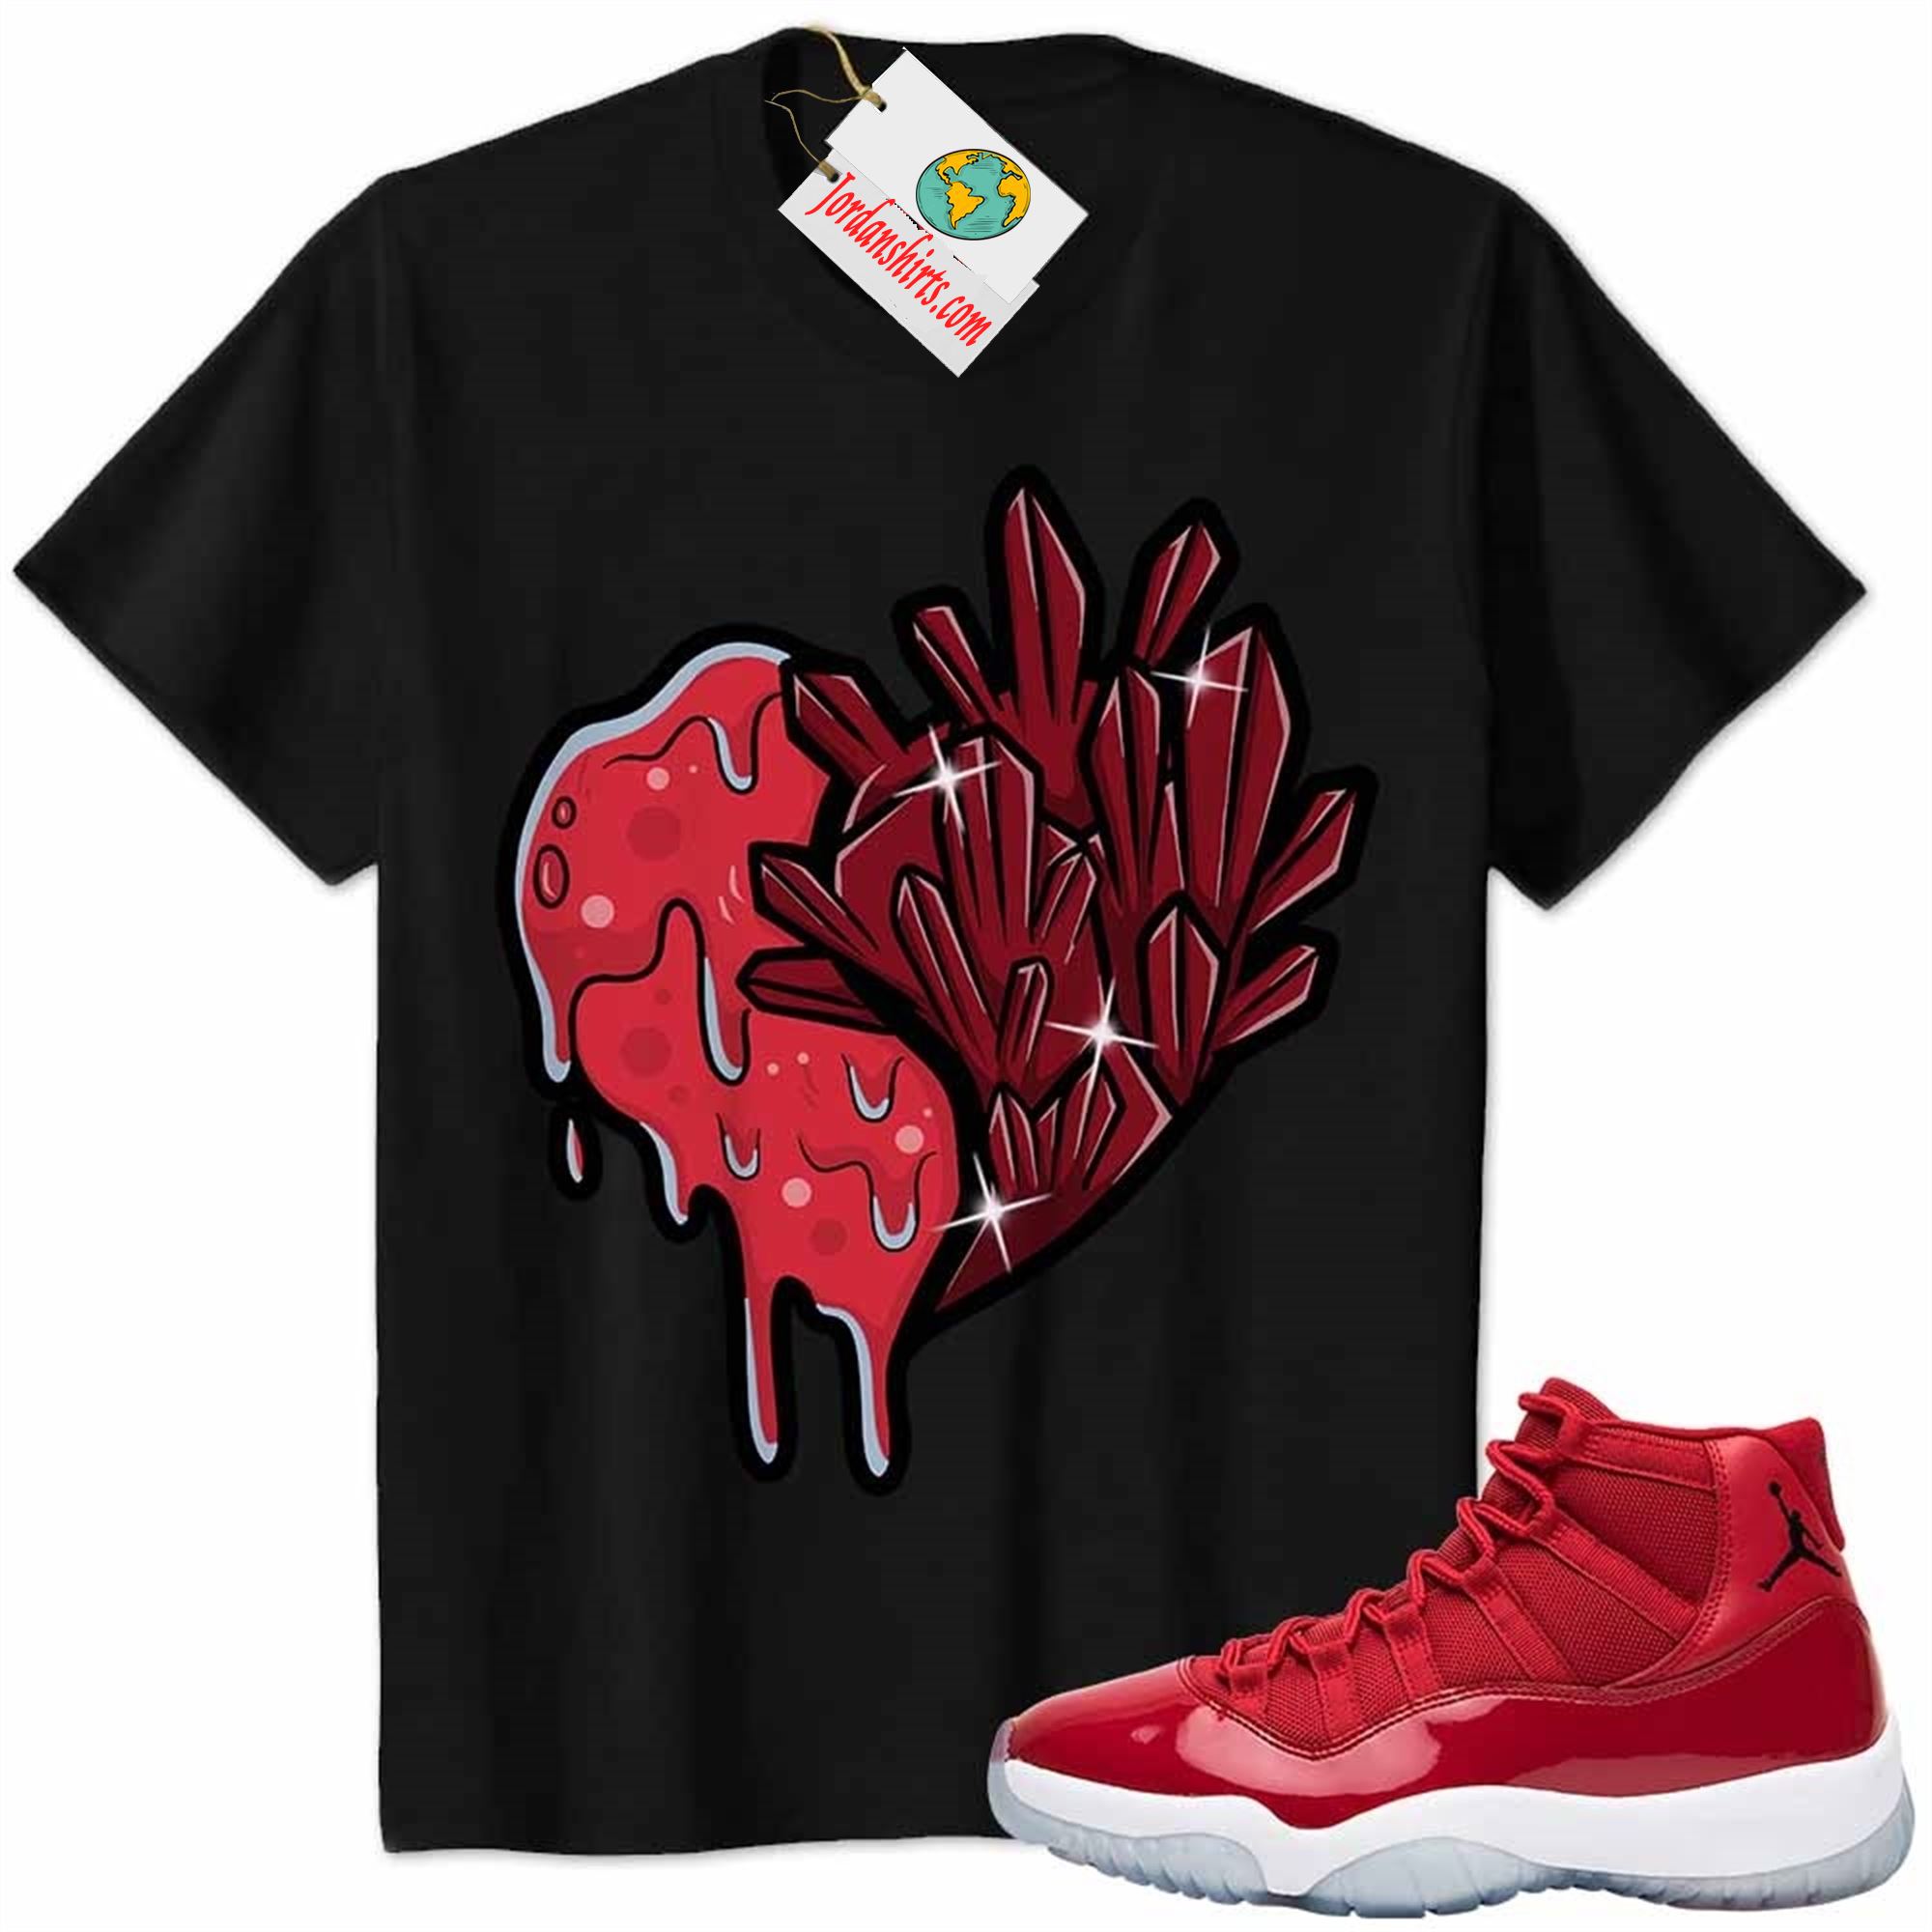 Jordan 11 Shirt, Crystal And Melt Heart Black Air Jordan 11 Gym Red 11s Plus Size Up To 5xl